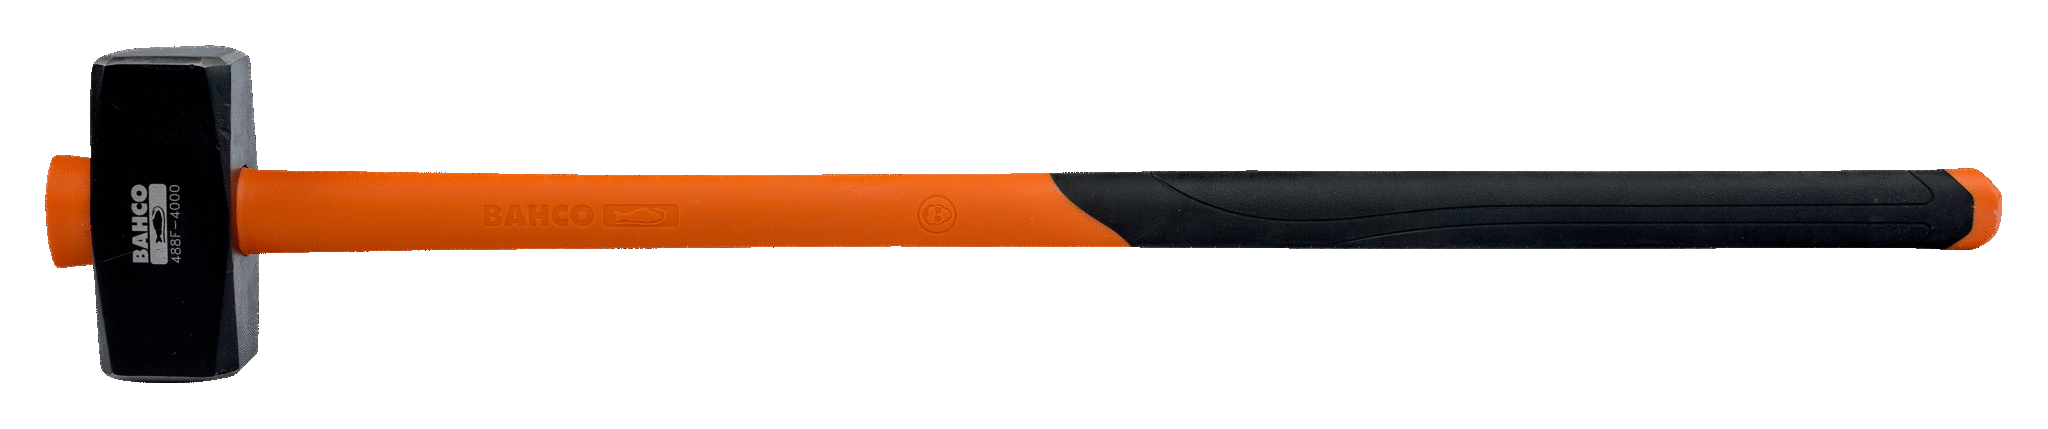 картинка Кувалда с квадратным бойком. Рукоятка из фибергласса BAHCO 488F-5000 от магазина "Элит-инструмент"